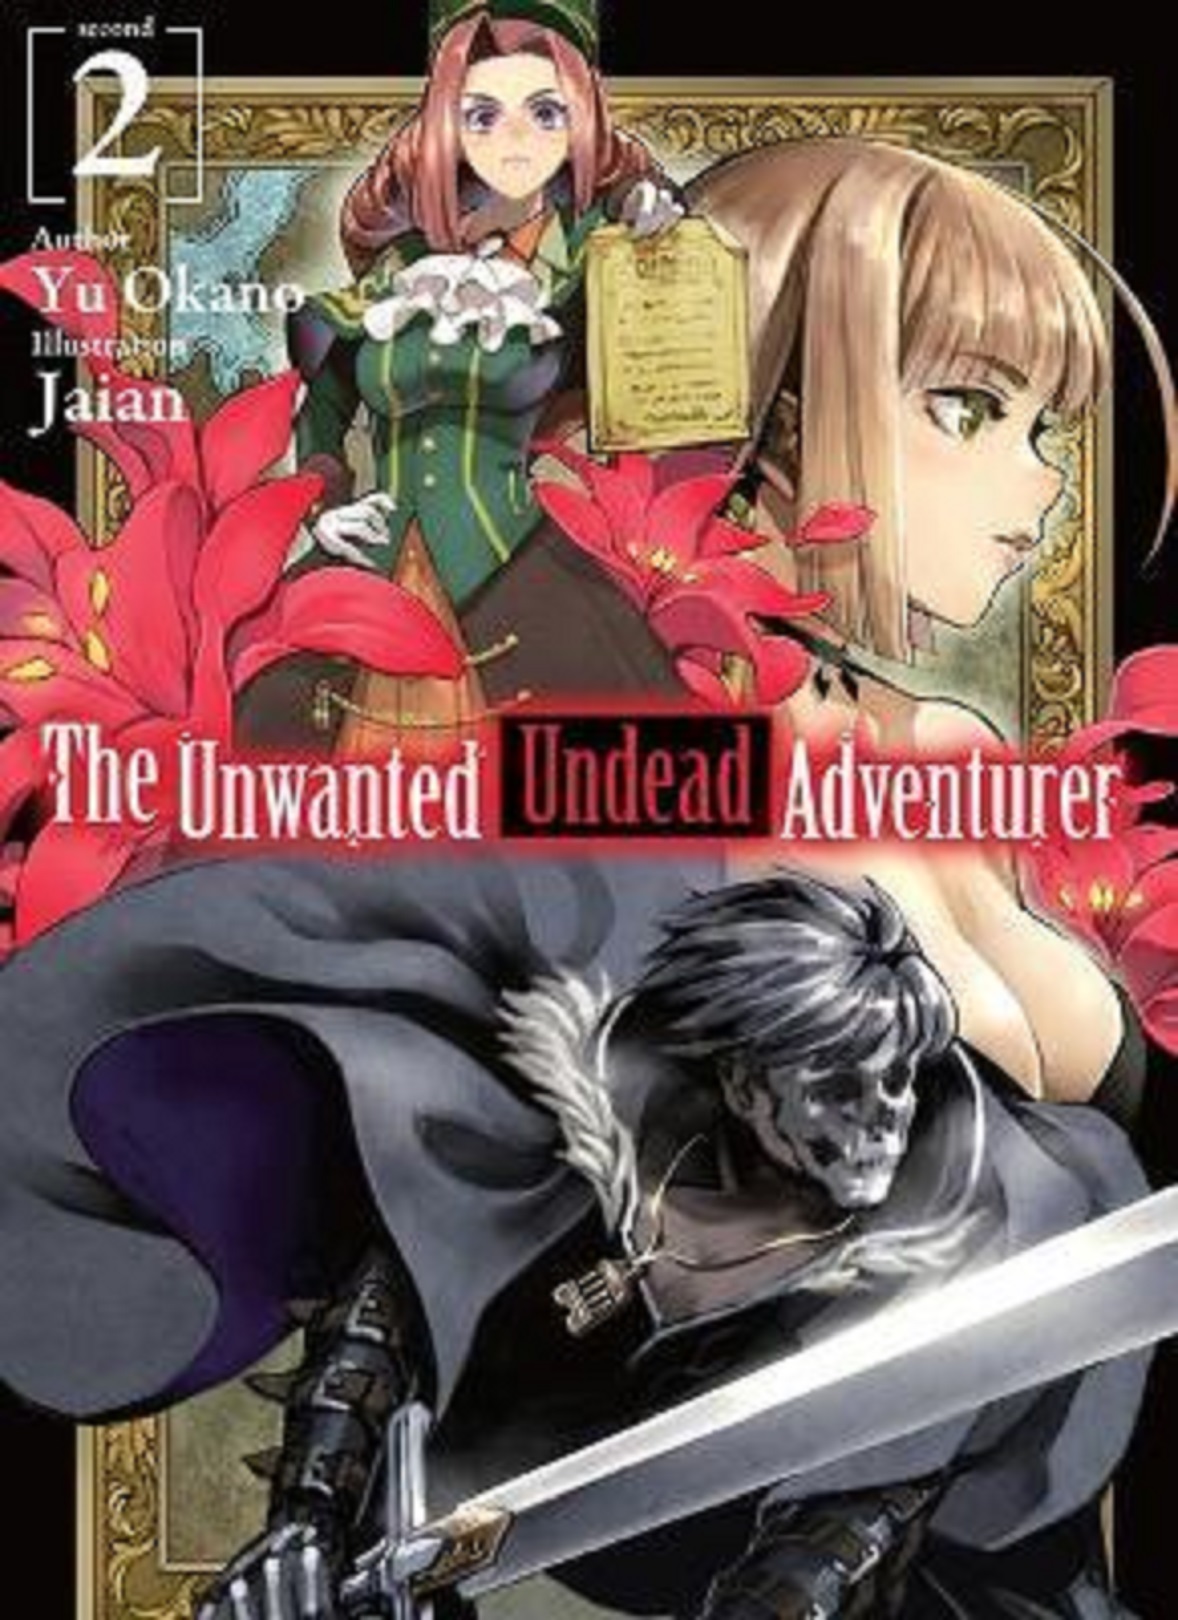 The Unwanted Undead Adventurer - Volume 2 | Yu Okano